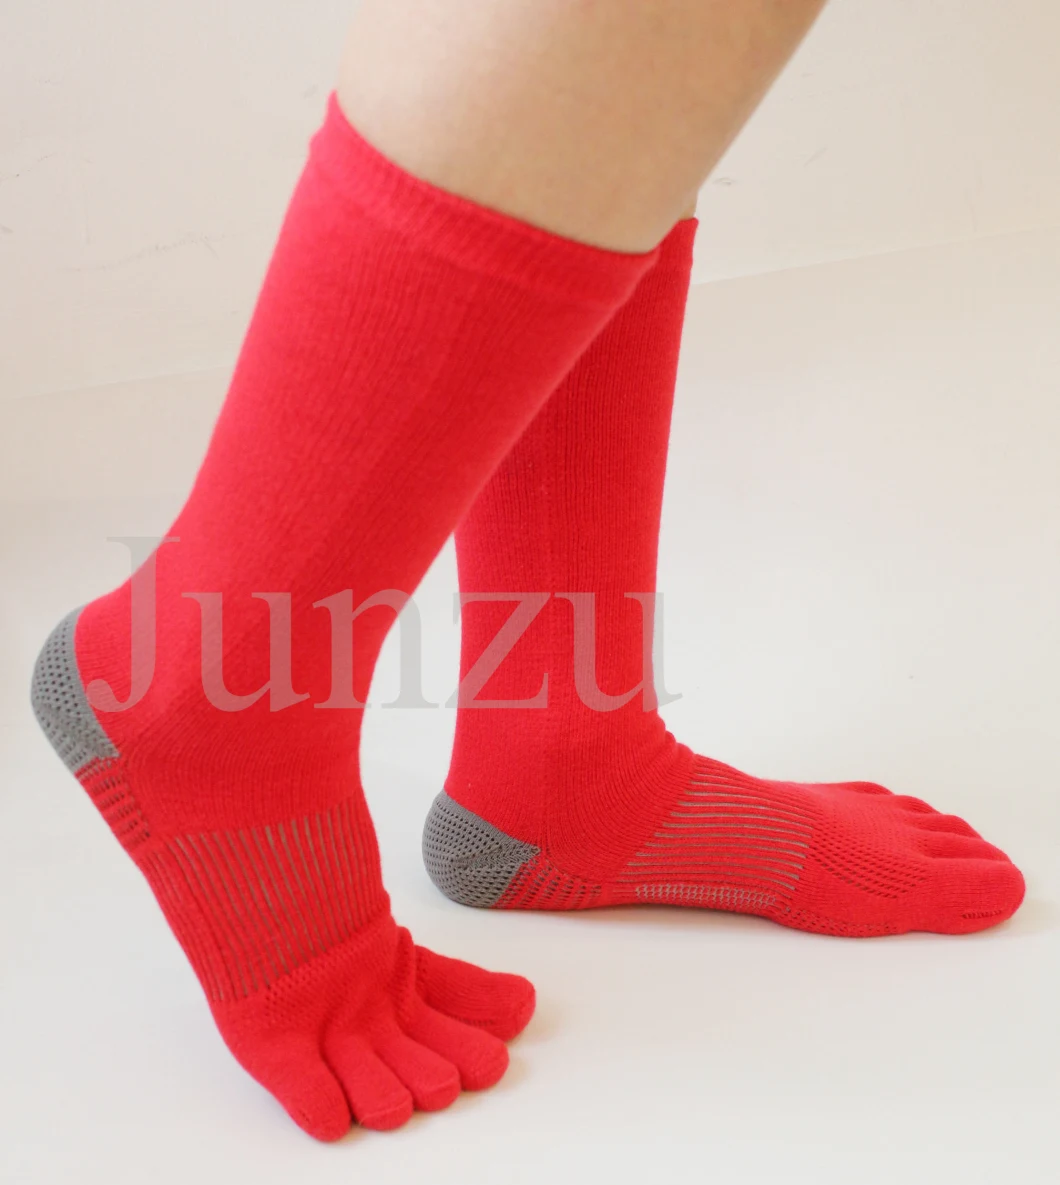 Five Fingers Socks Toe Socks Yoga Sock